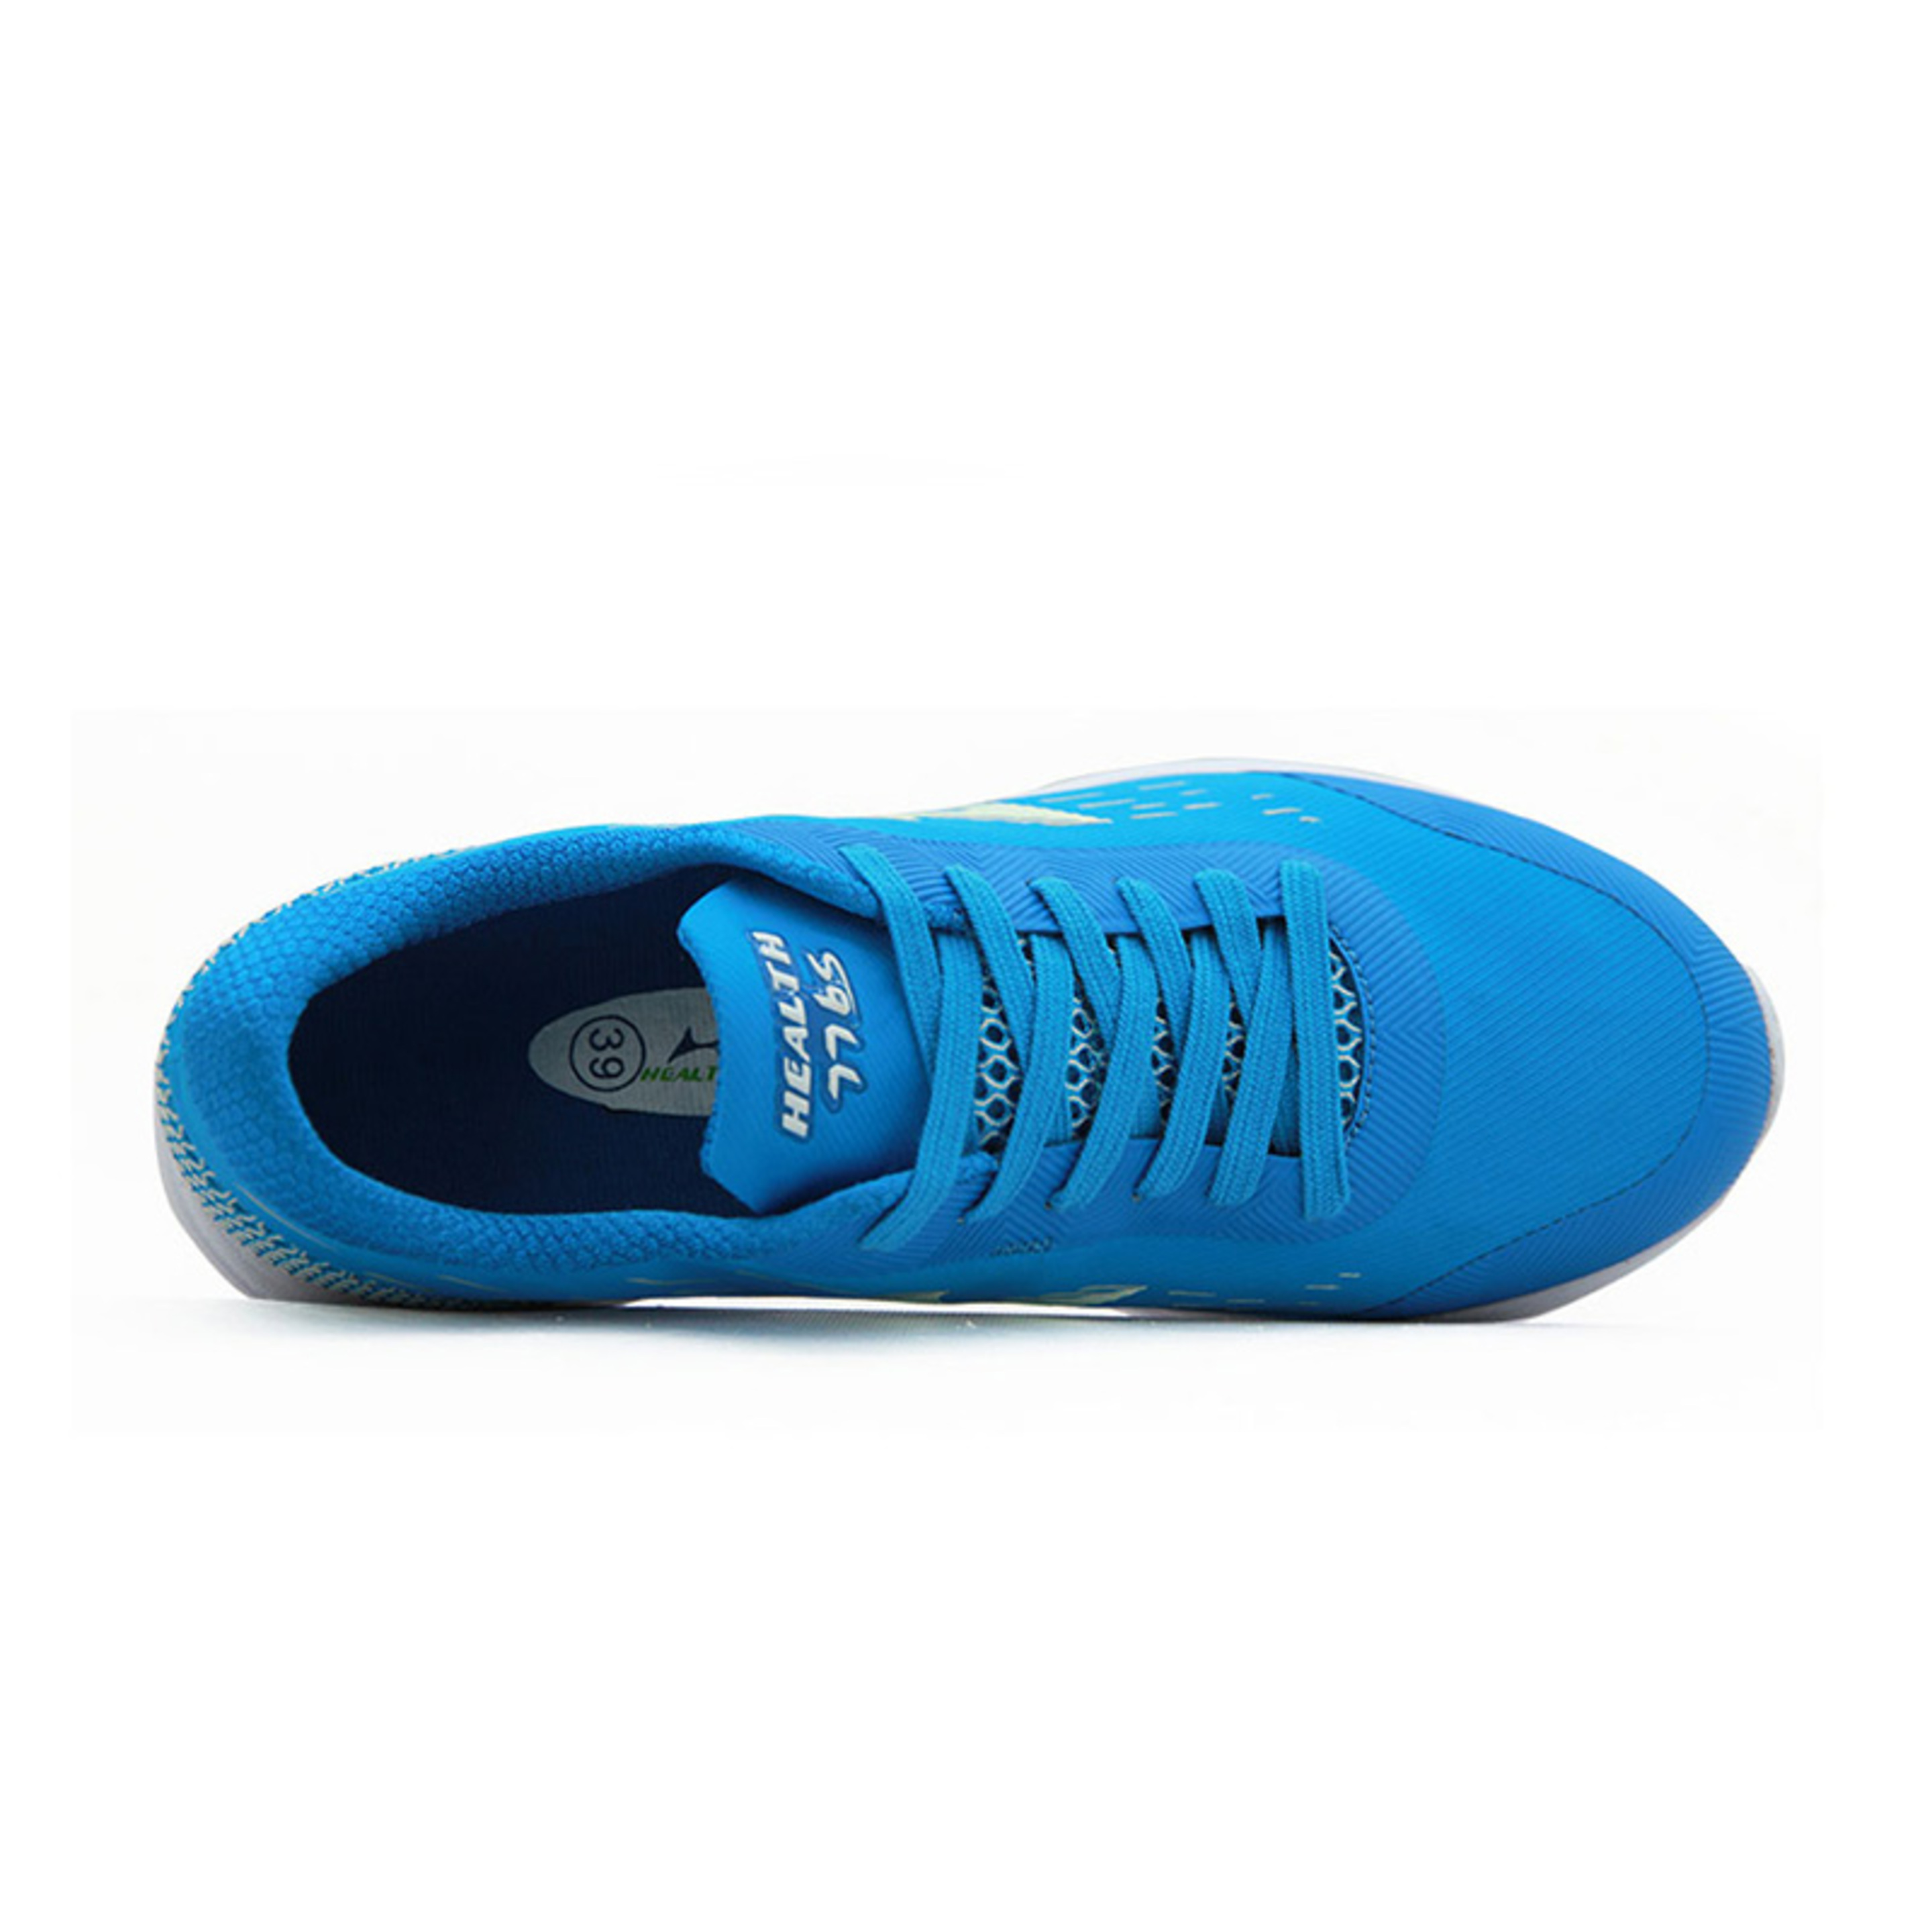 Zapatillas Running Profesional Health 776s - azul  MKP